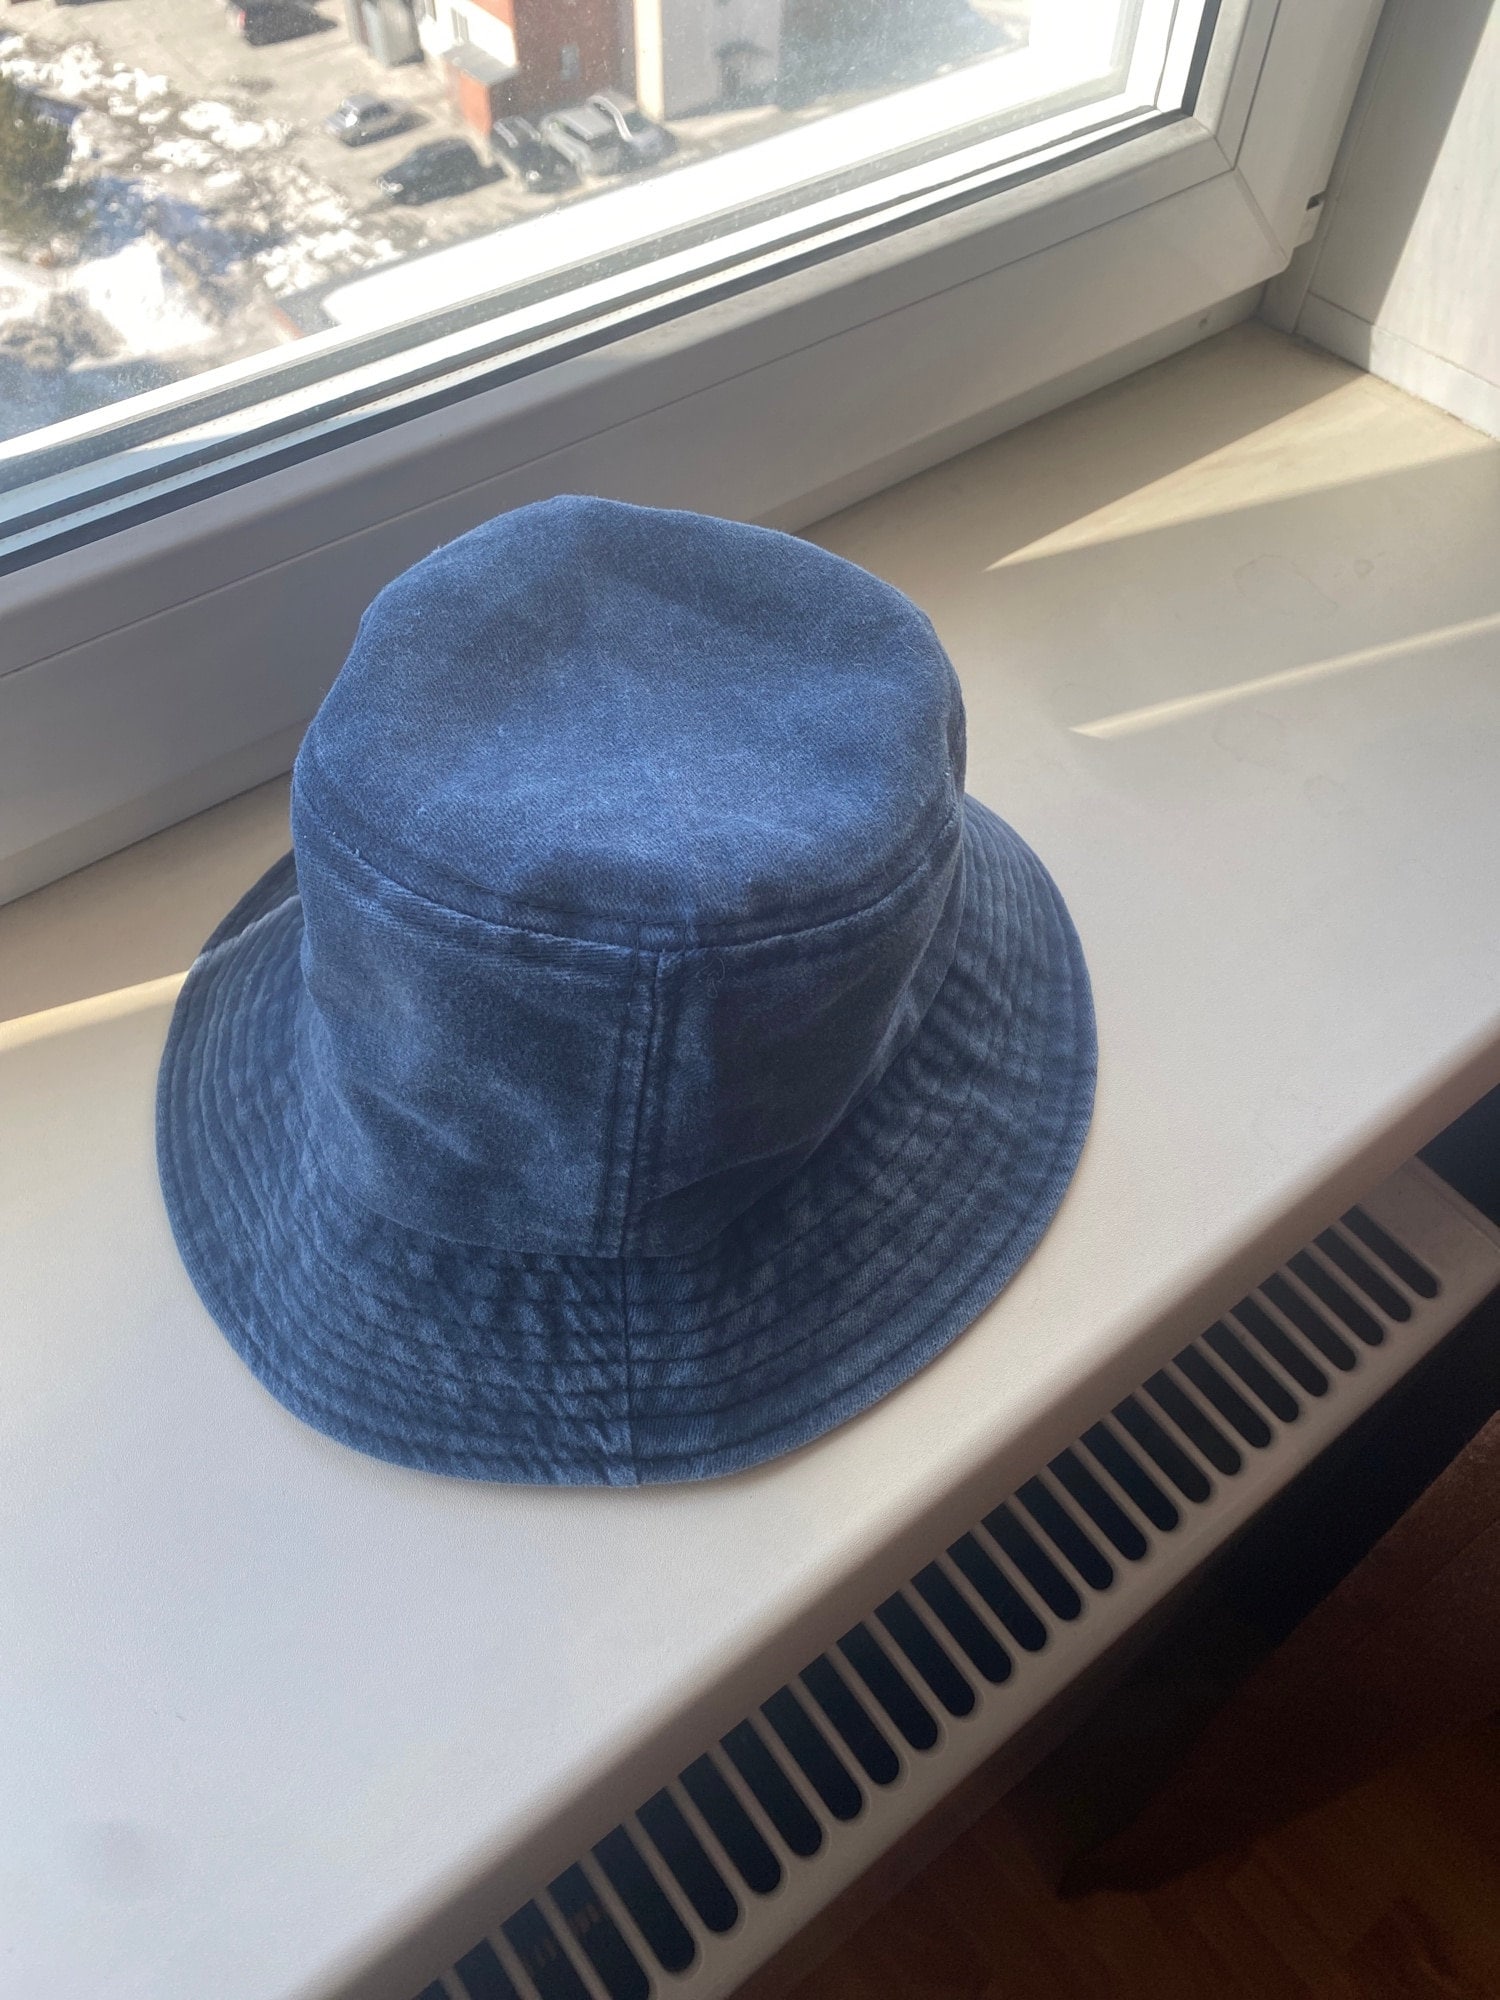 Washed Denim Bucket Hat Kids Wide Brim Cotton Fisherman Hat Girls Boys Summer Panama Sun Hat Outdoor Beach Fishing Cap